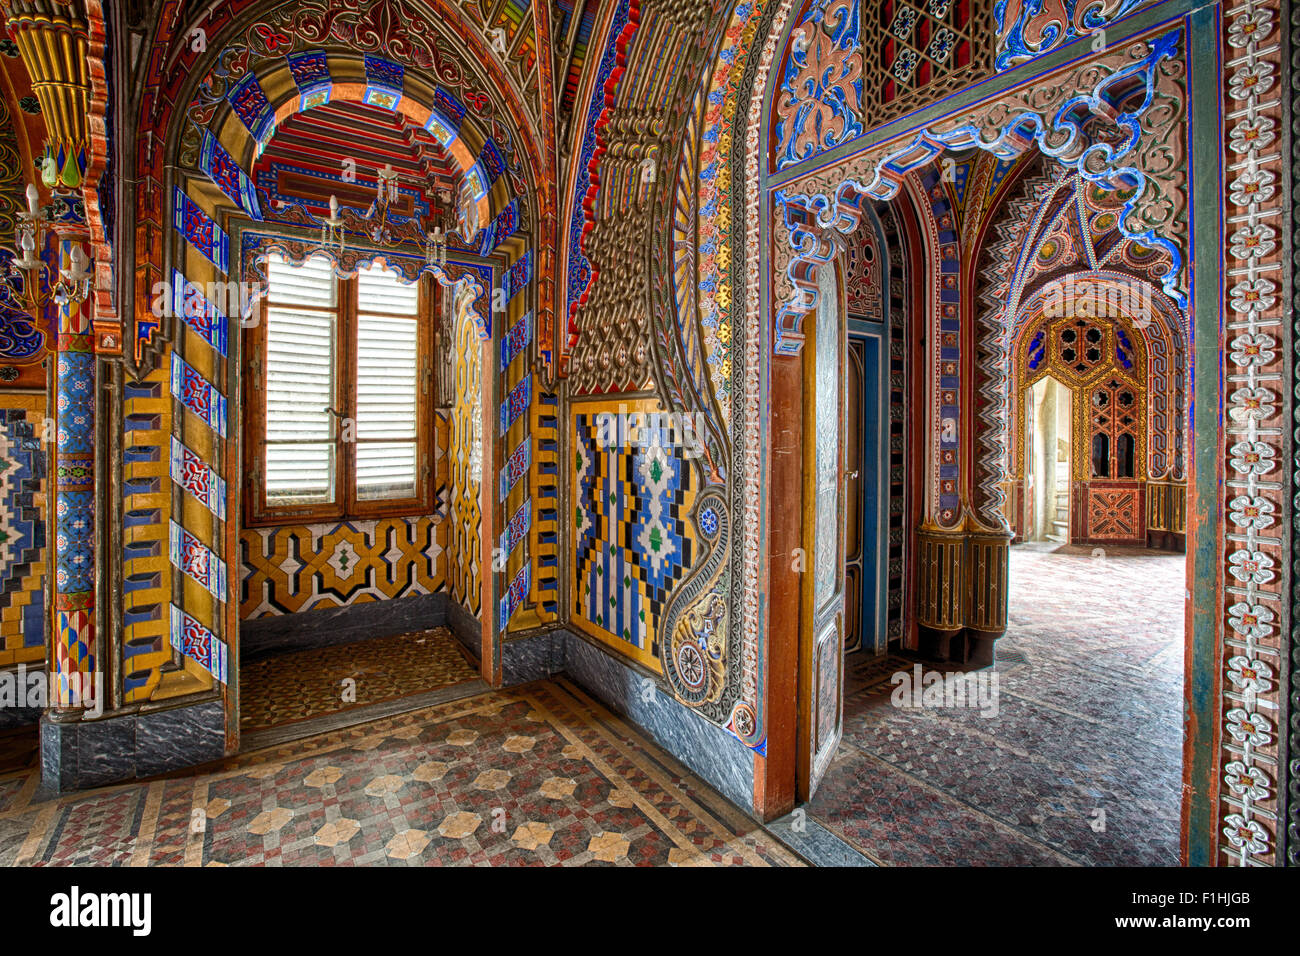 Moorish style palace interior architecture of 1001 Arabian nights with fantasy decoration Stock Photo